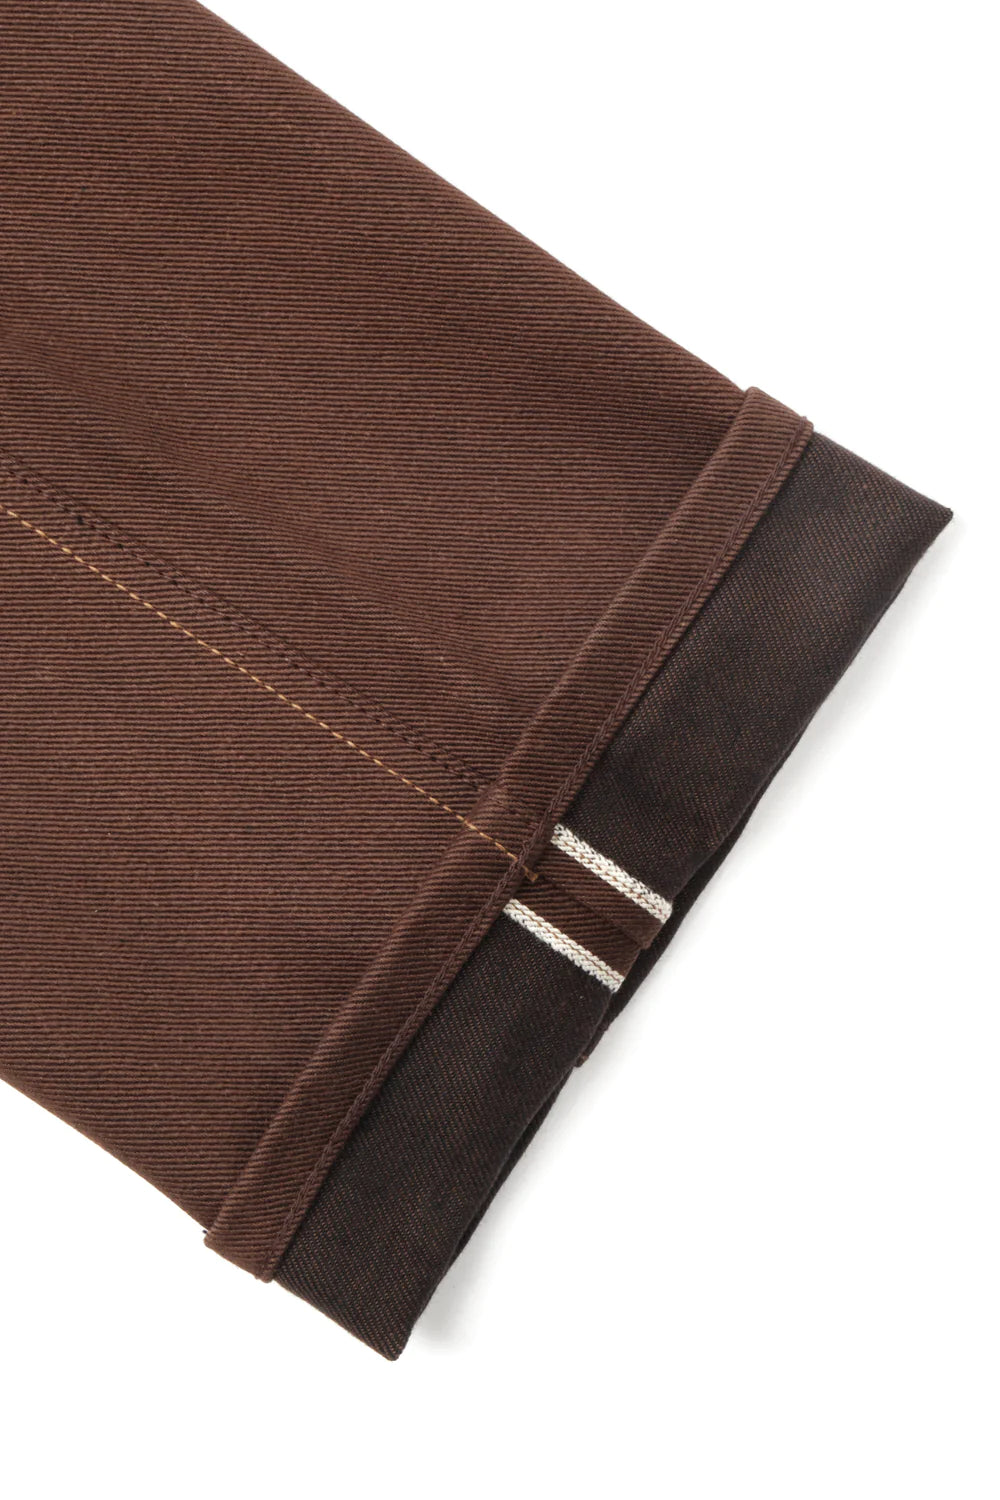 Freenote Cloth Wilkes - 15oz Dark Brown Denim